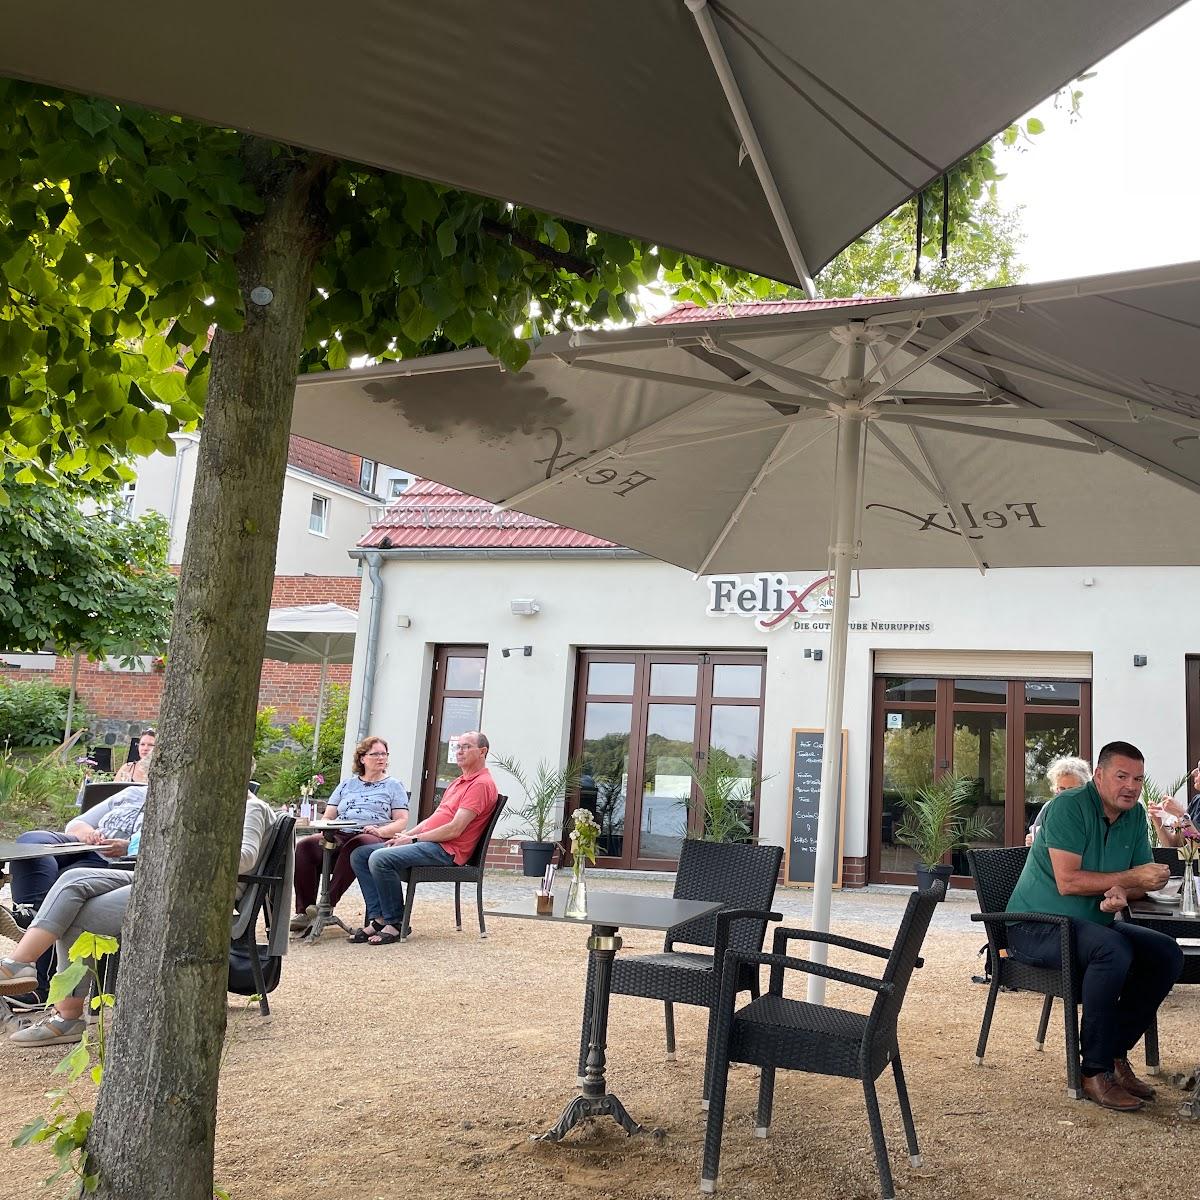 Restaurant "Felix - Die gute Stube Neuruppins" in Neuruppin